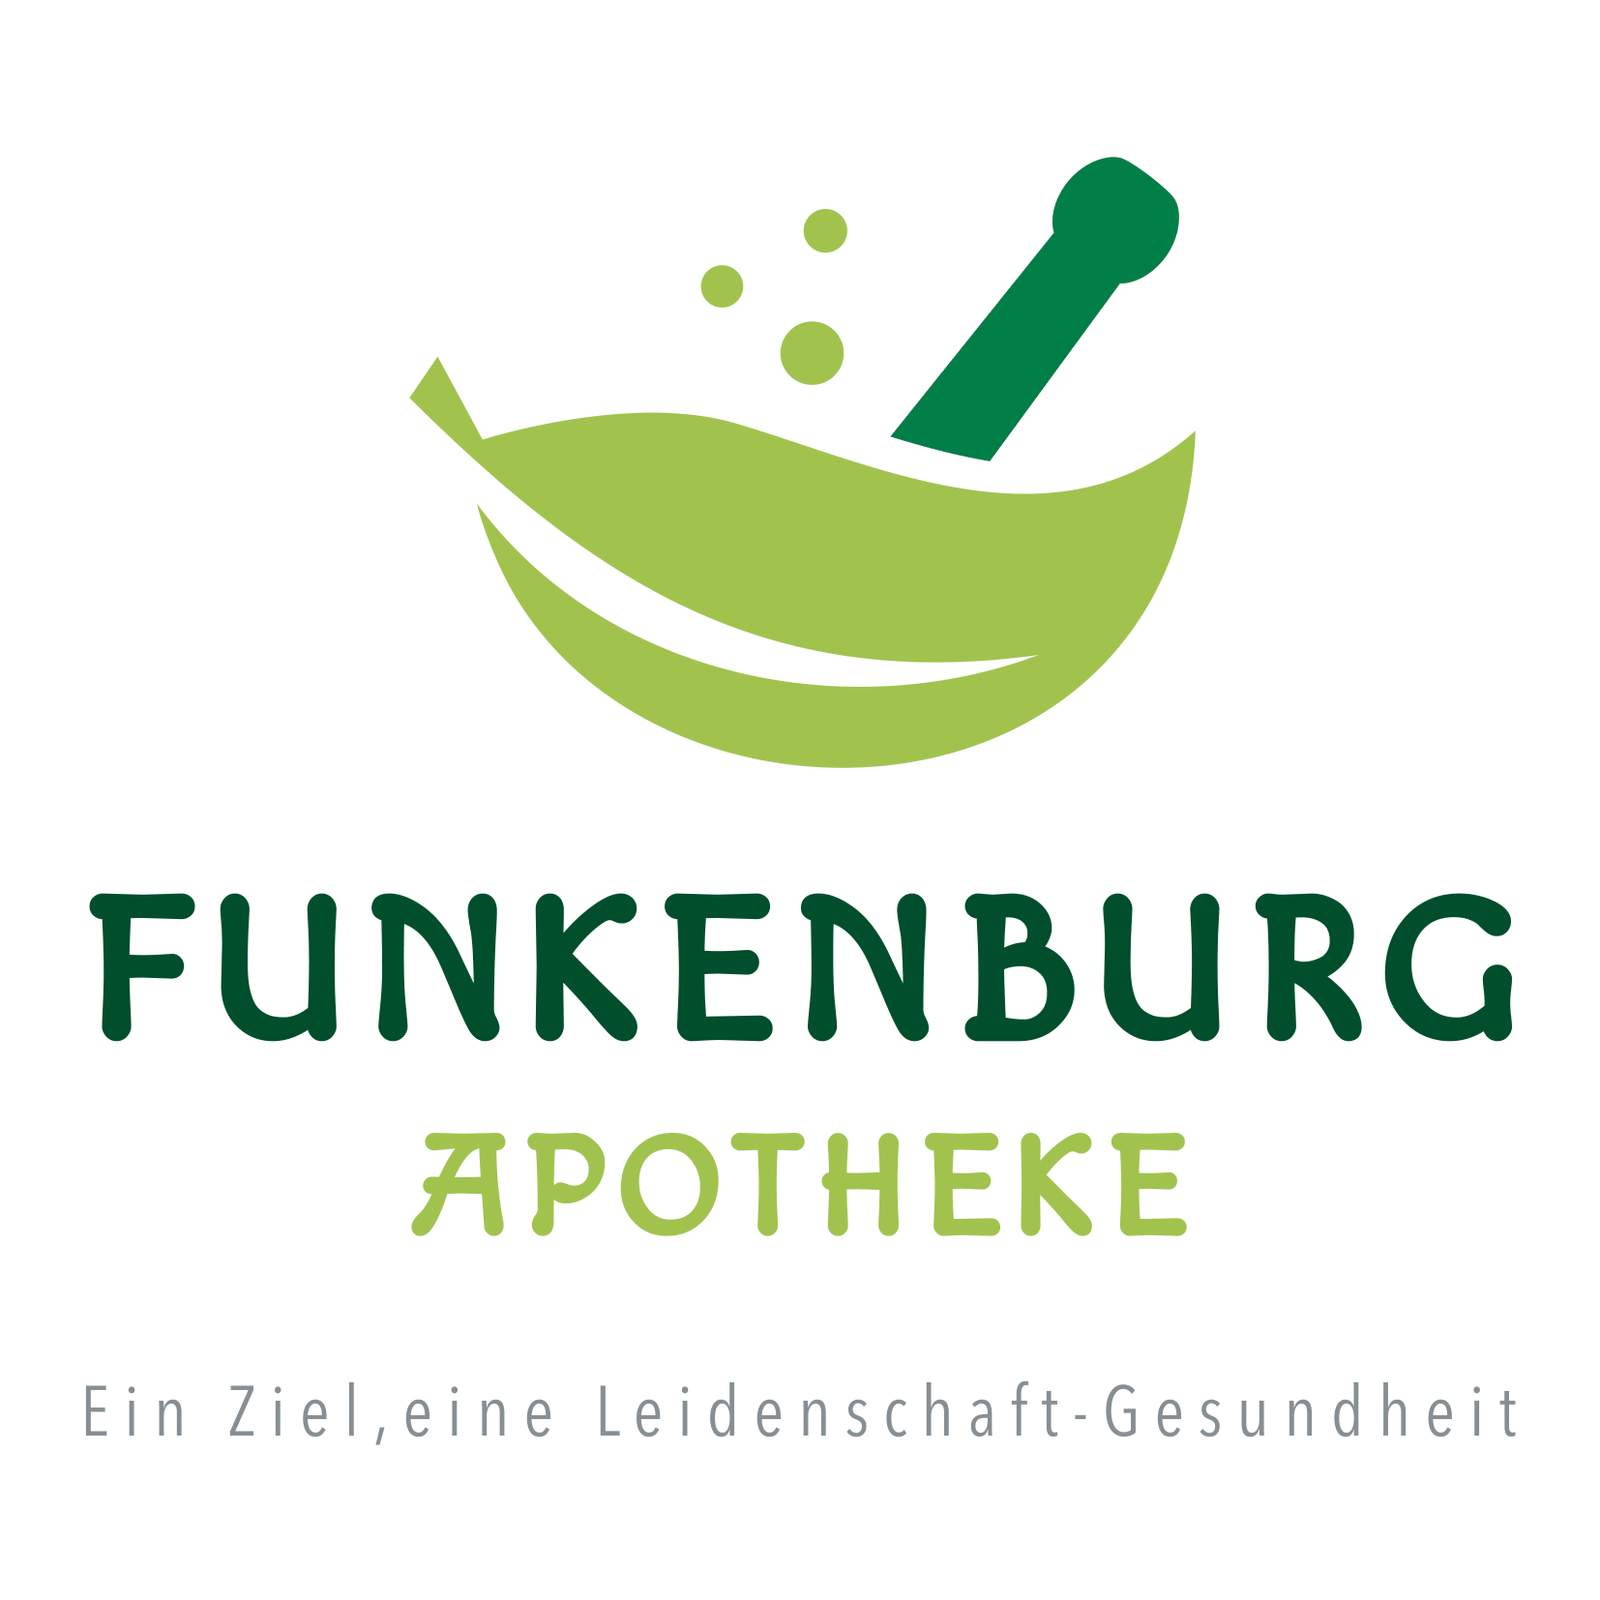 Funkenburg Apotheke in Dortmund - Logo